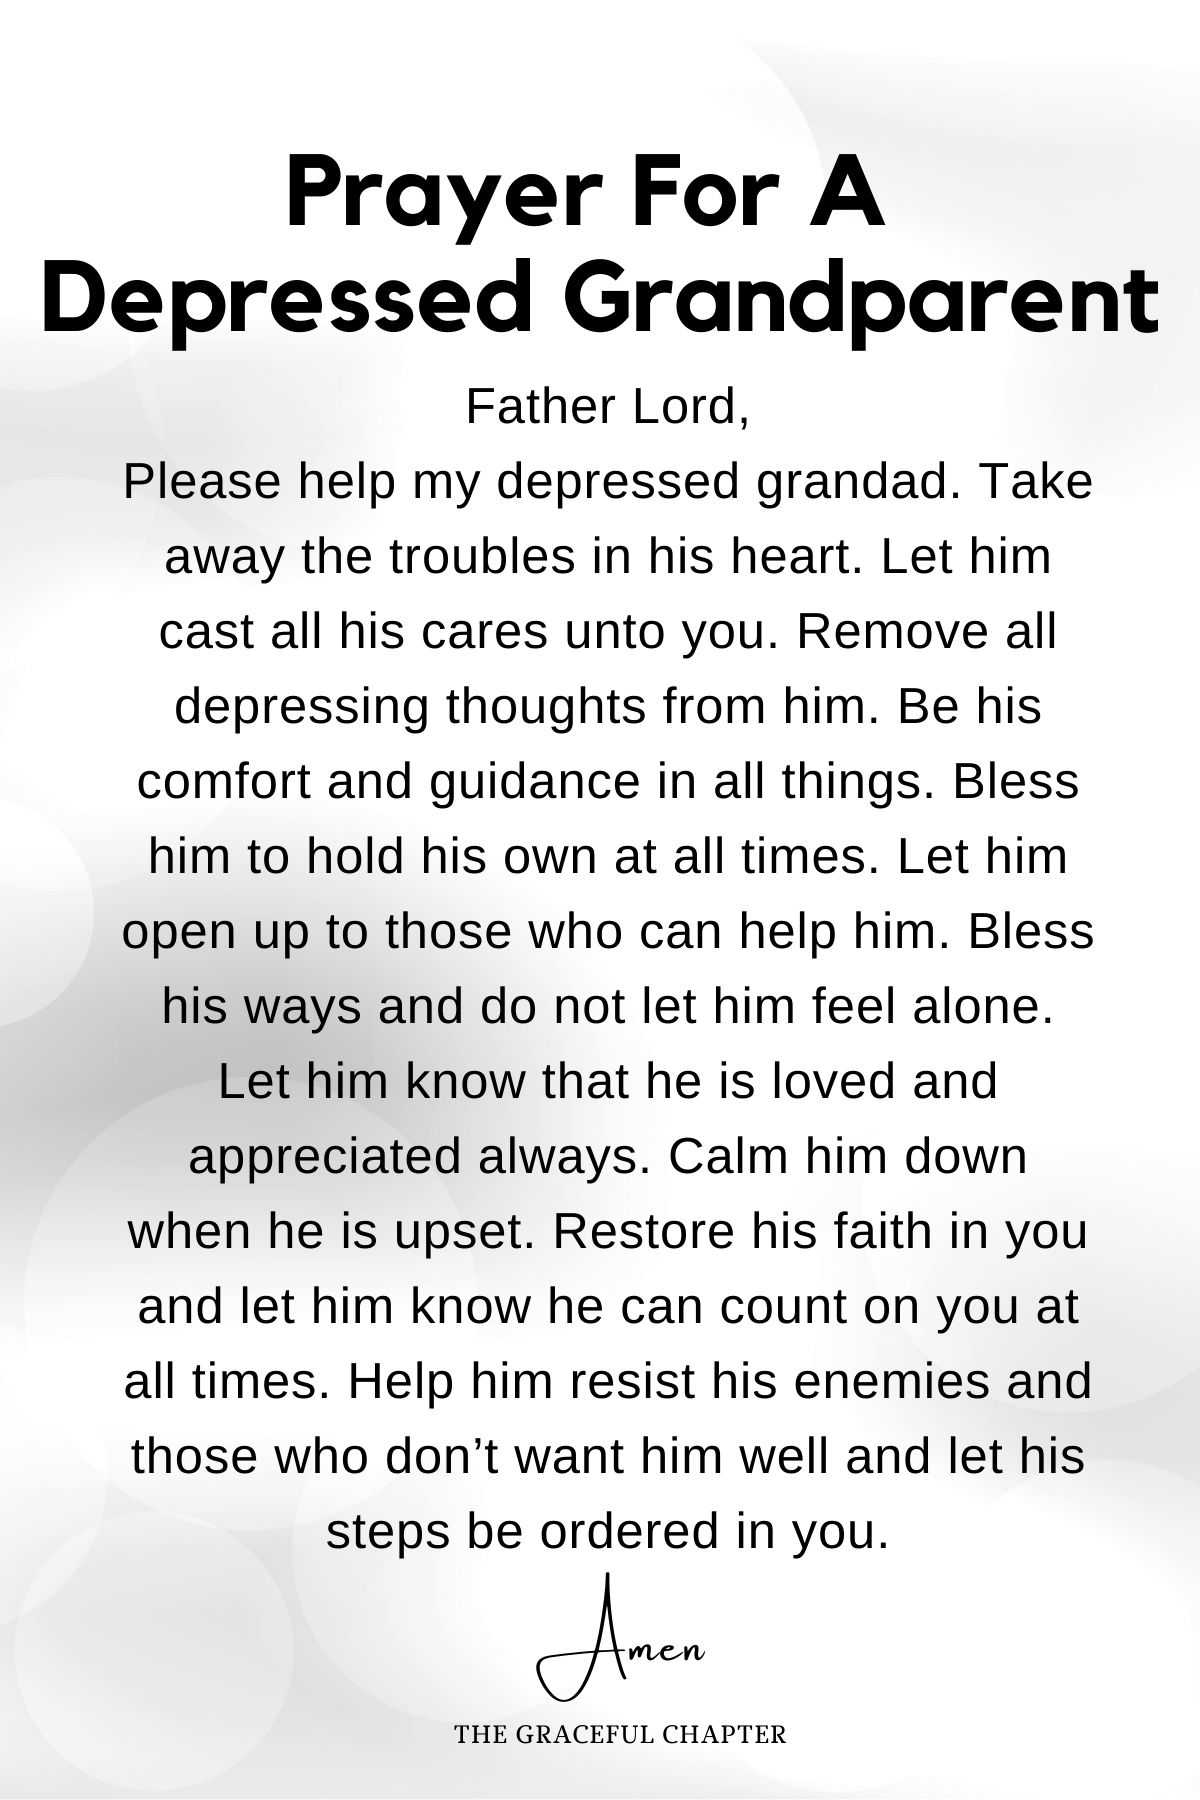 Prayer for a depressed grandparent